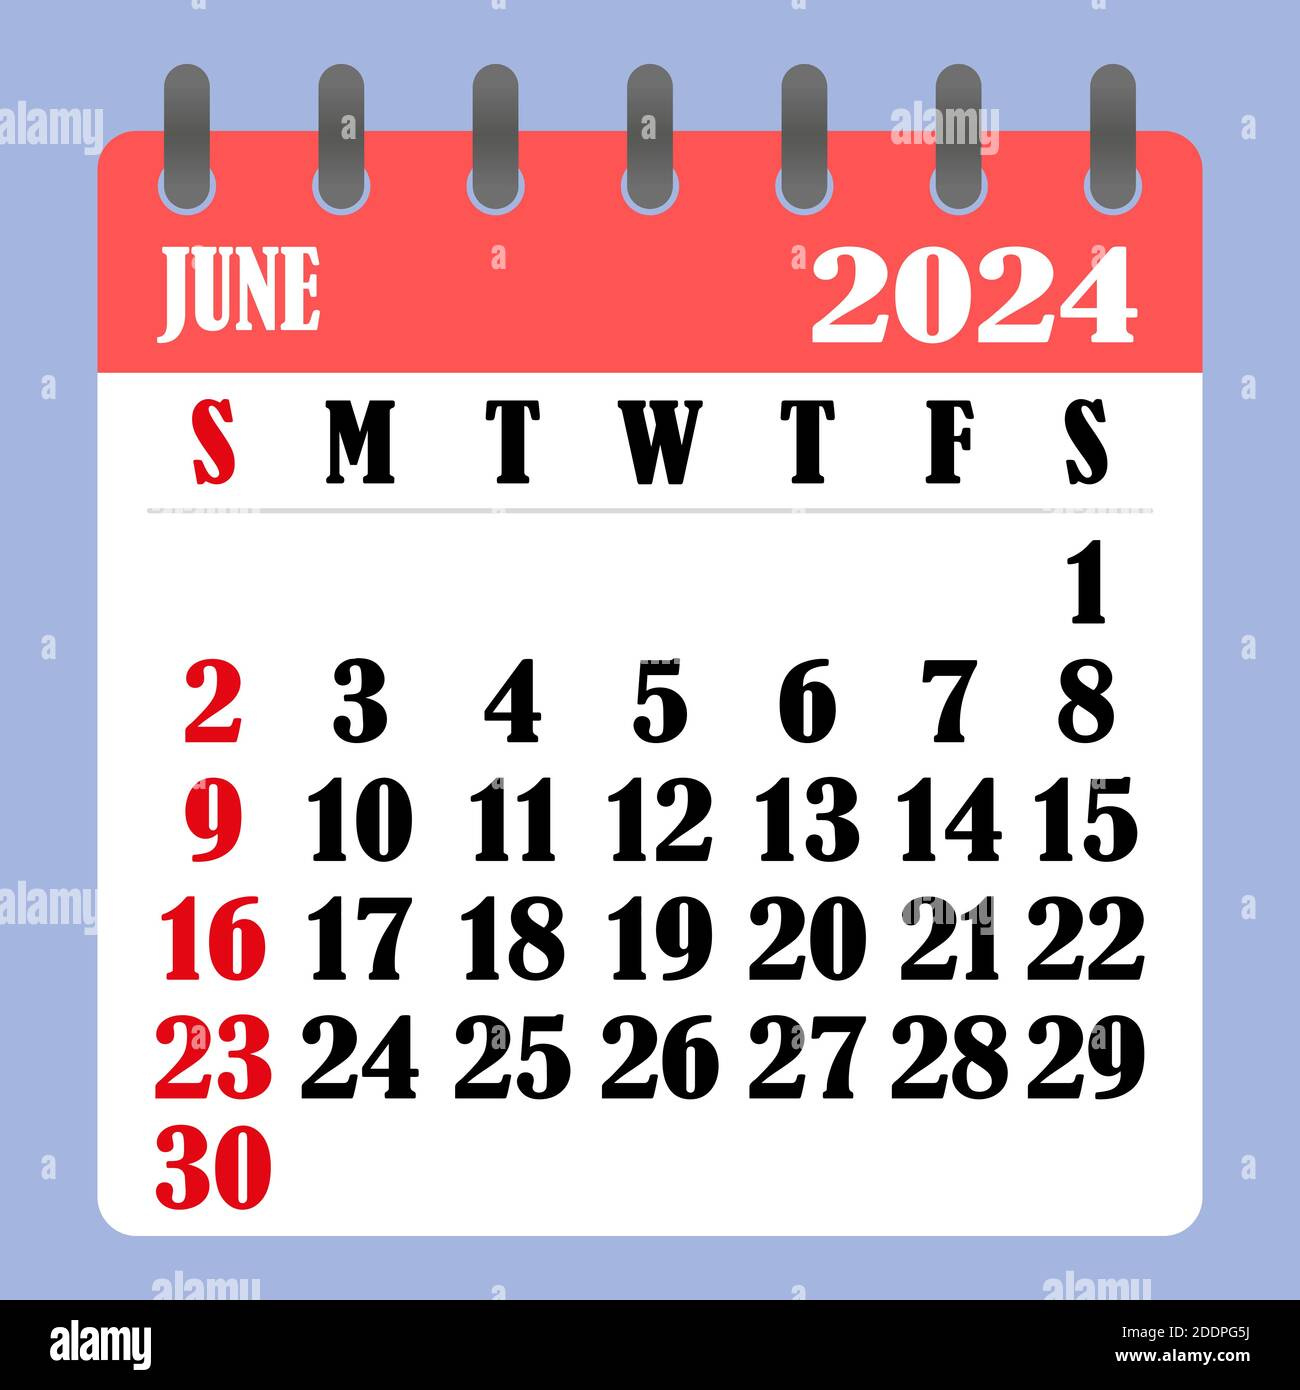 June 2024 Stock Vector Images - Alamy throughout June 2 2024 Calendar